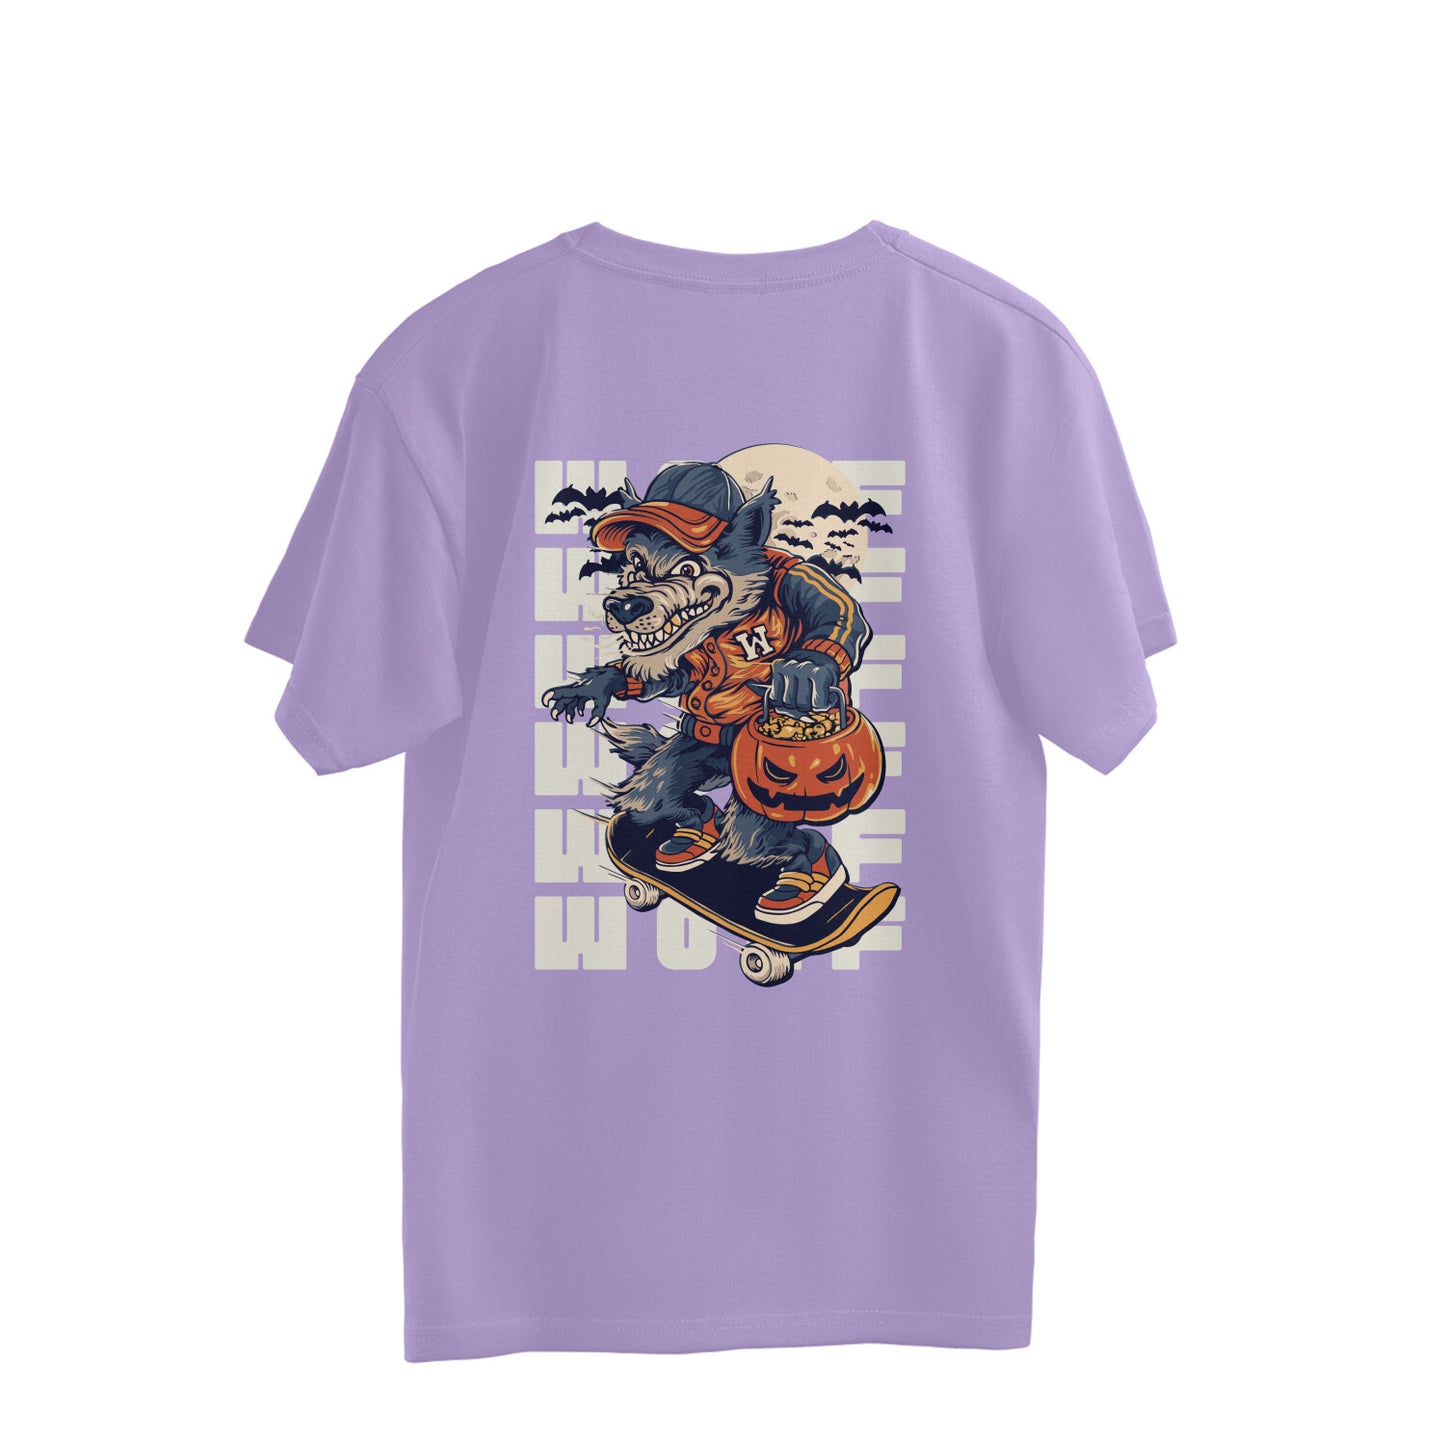 Unisex oversized printed lavender t-shirt